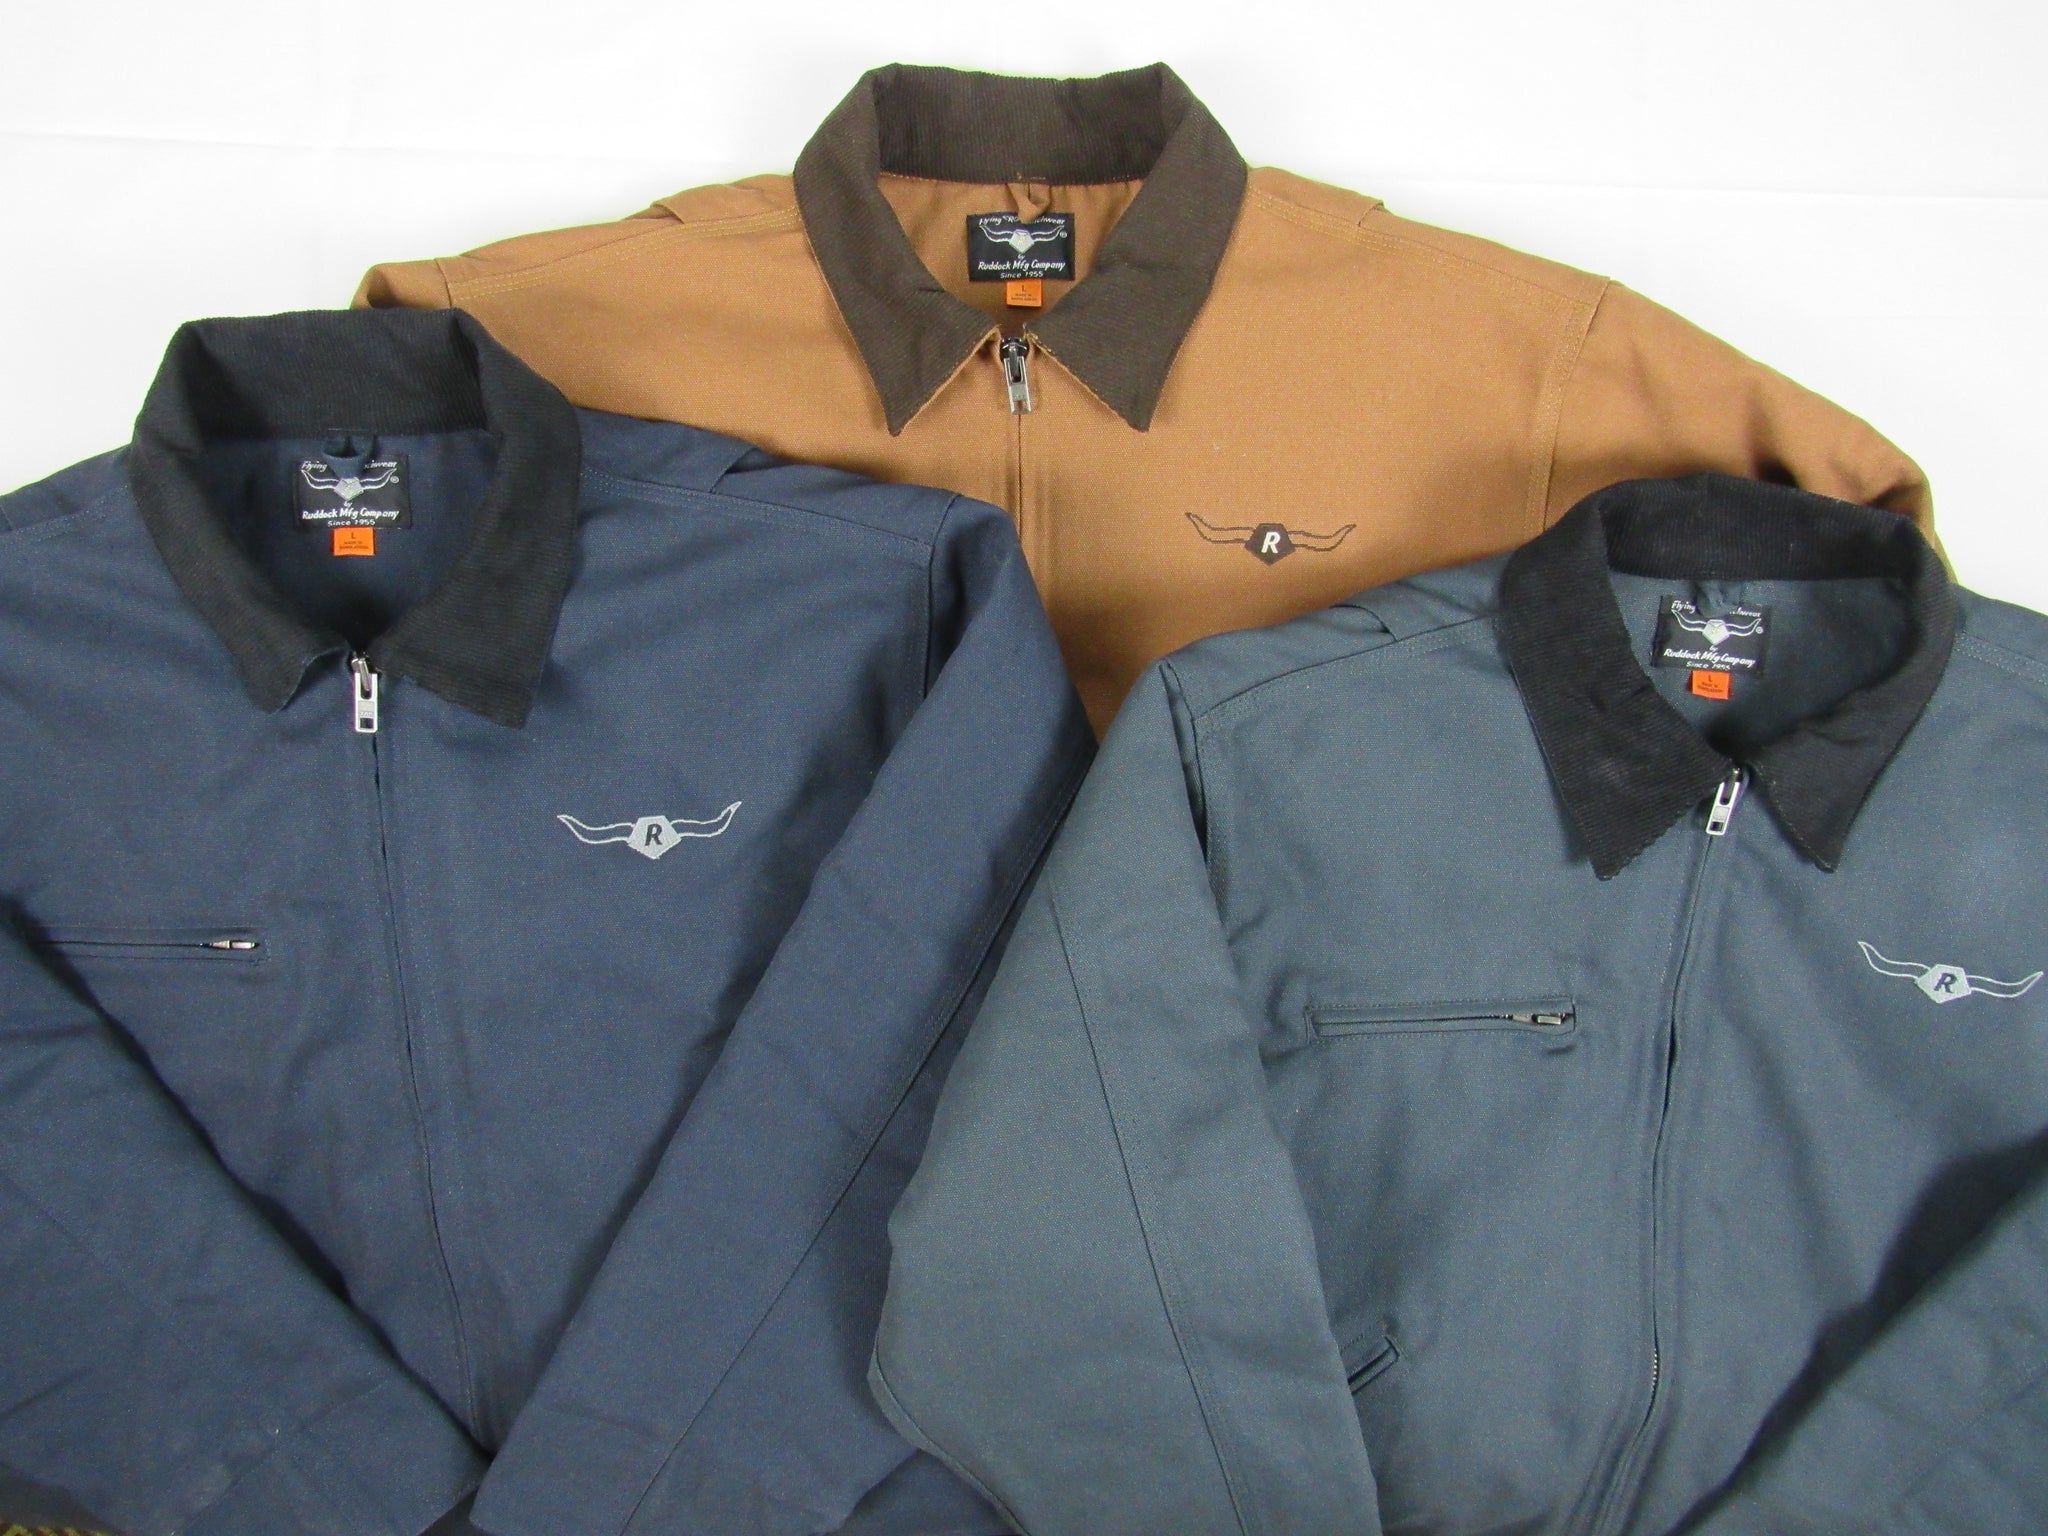 Flying R Ranchwear Jackets in three colors